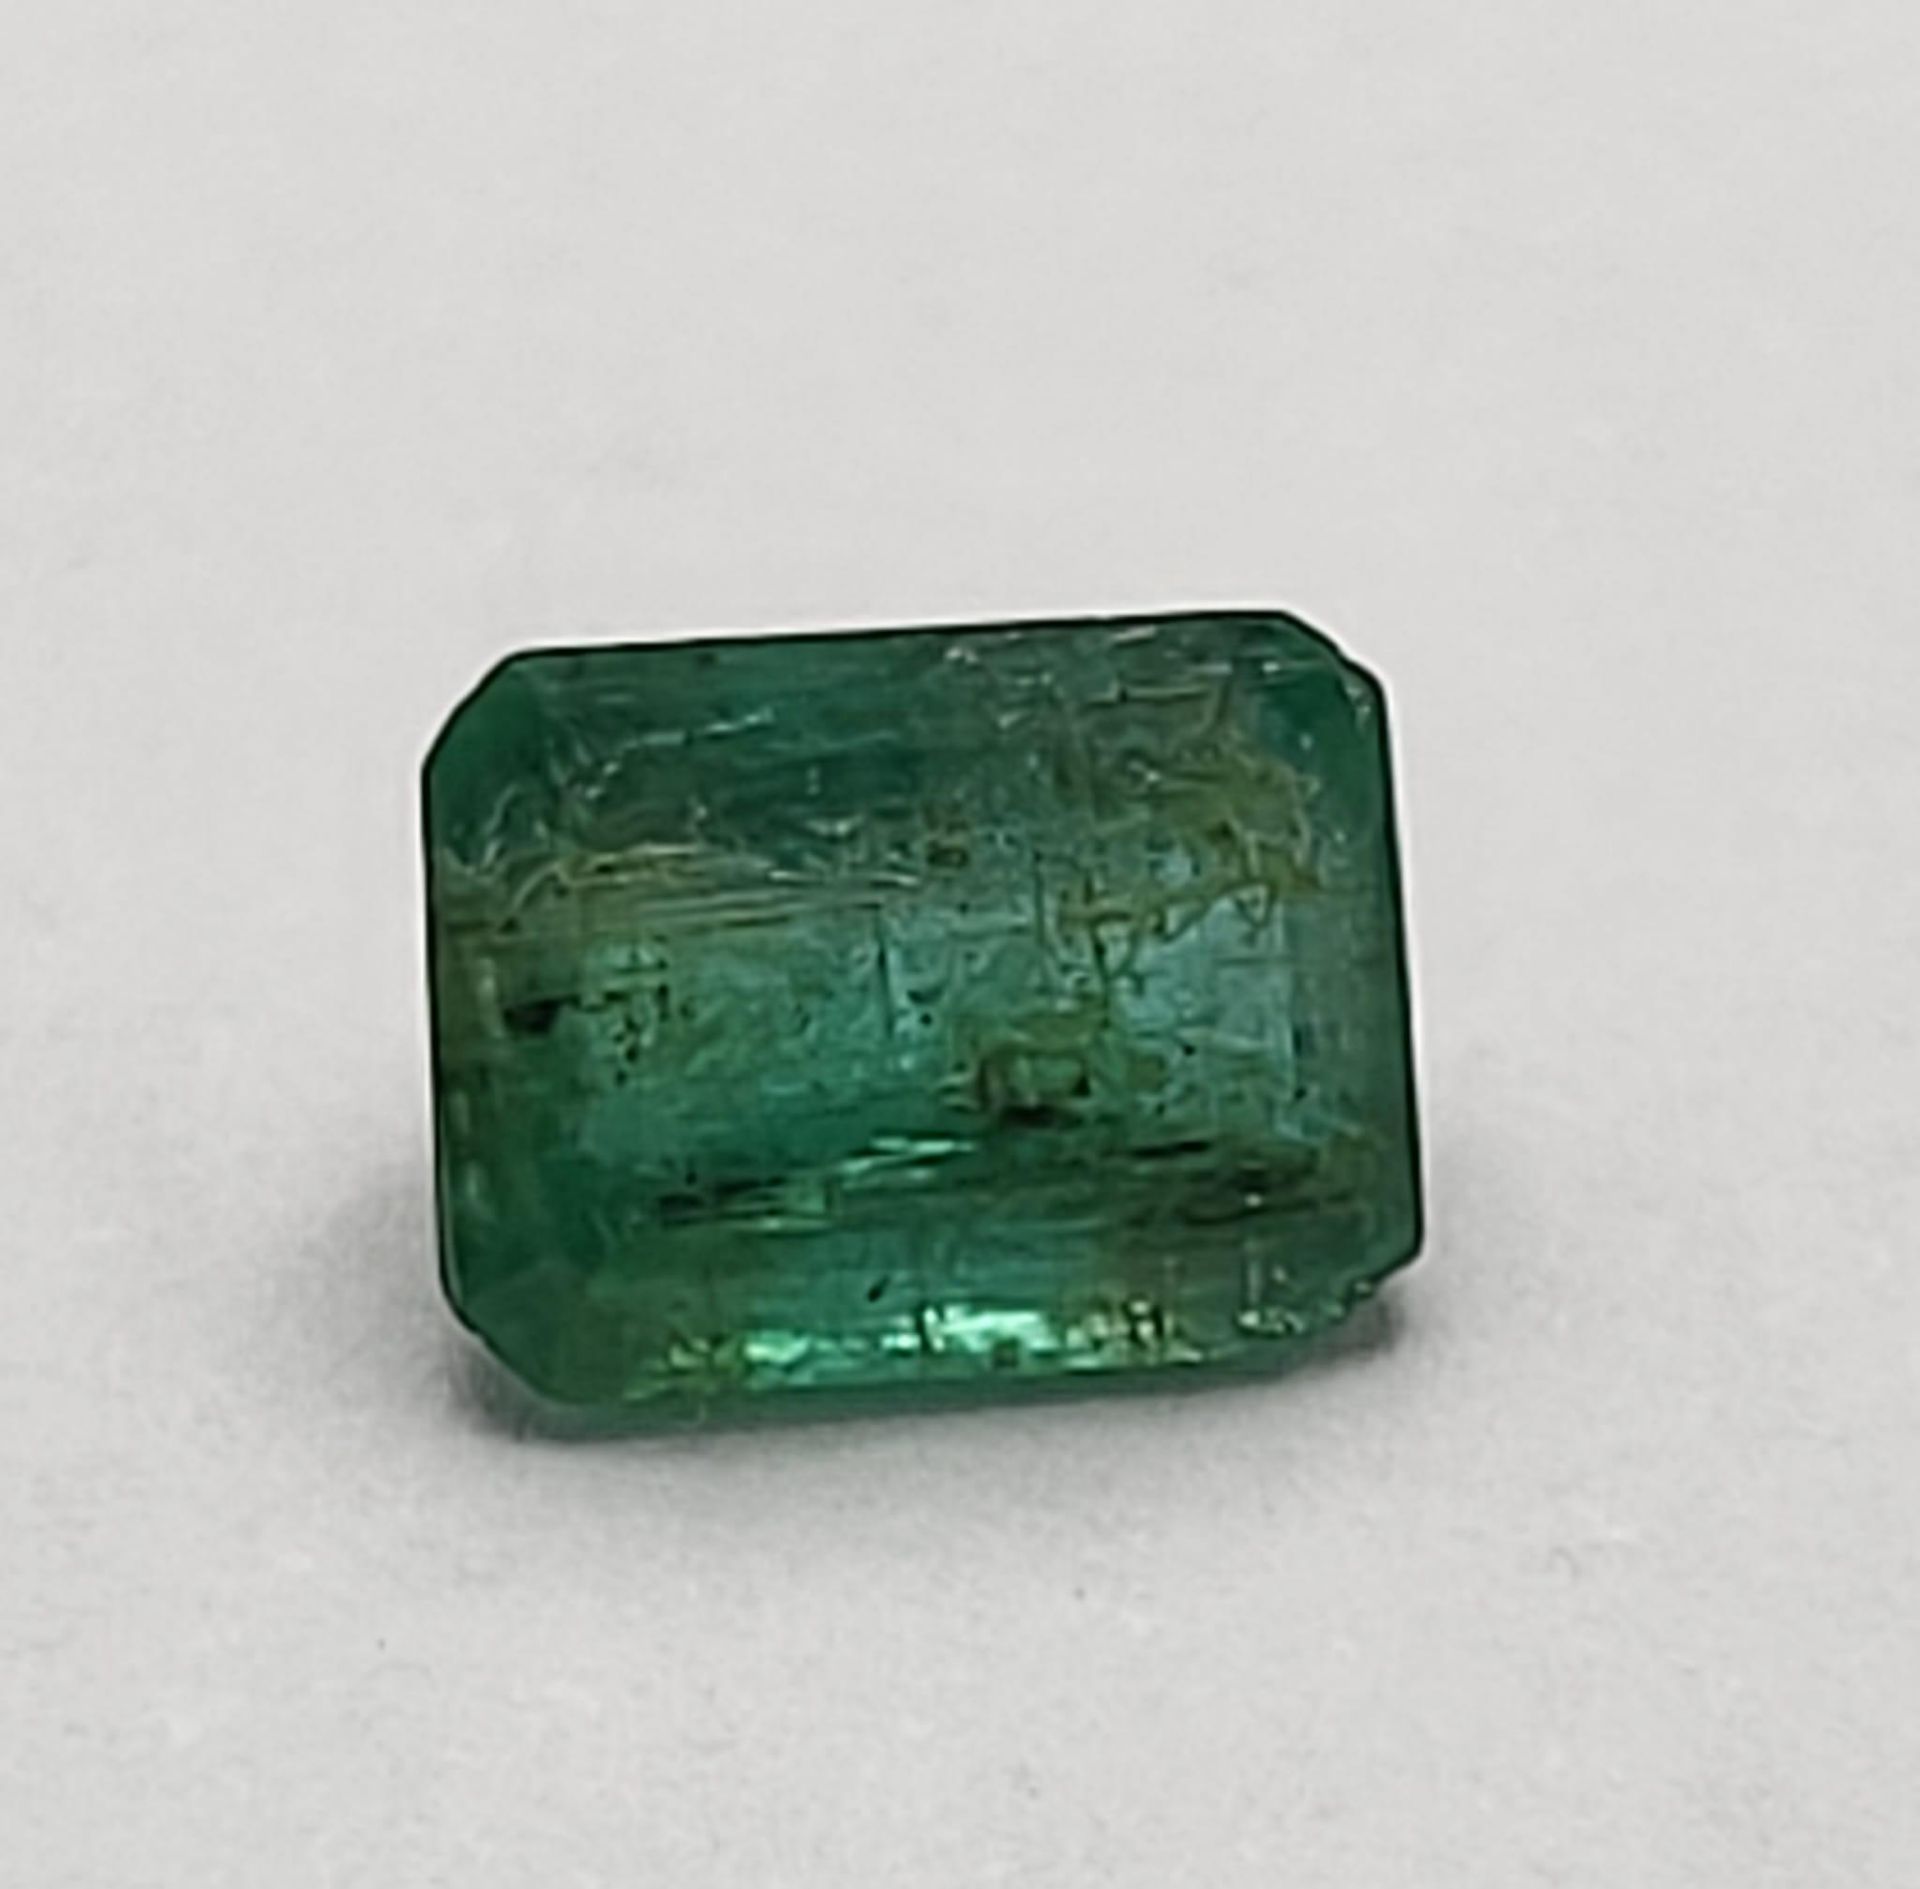 A 1.14ct Zambian Emerald Gemstone. Swiss Origin Certification Included.